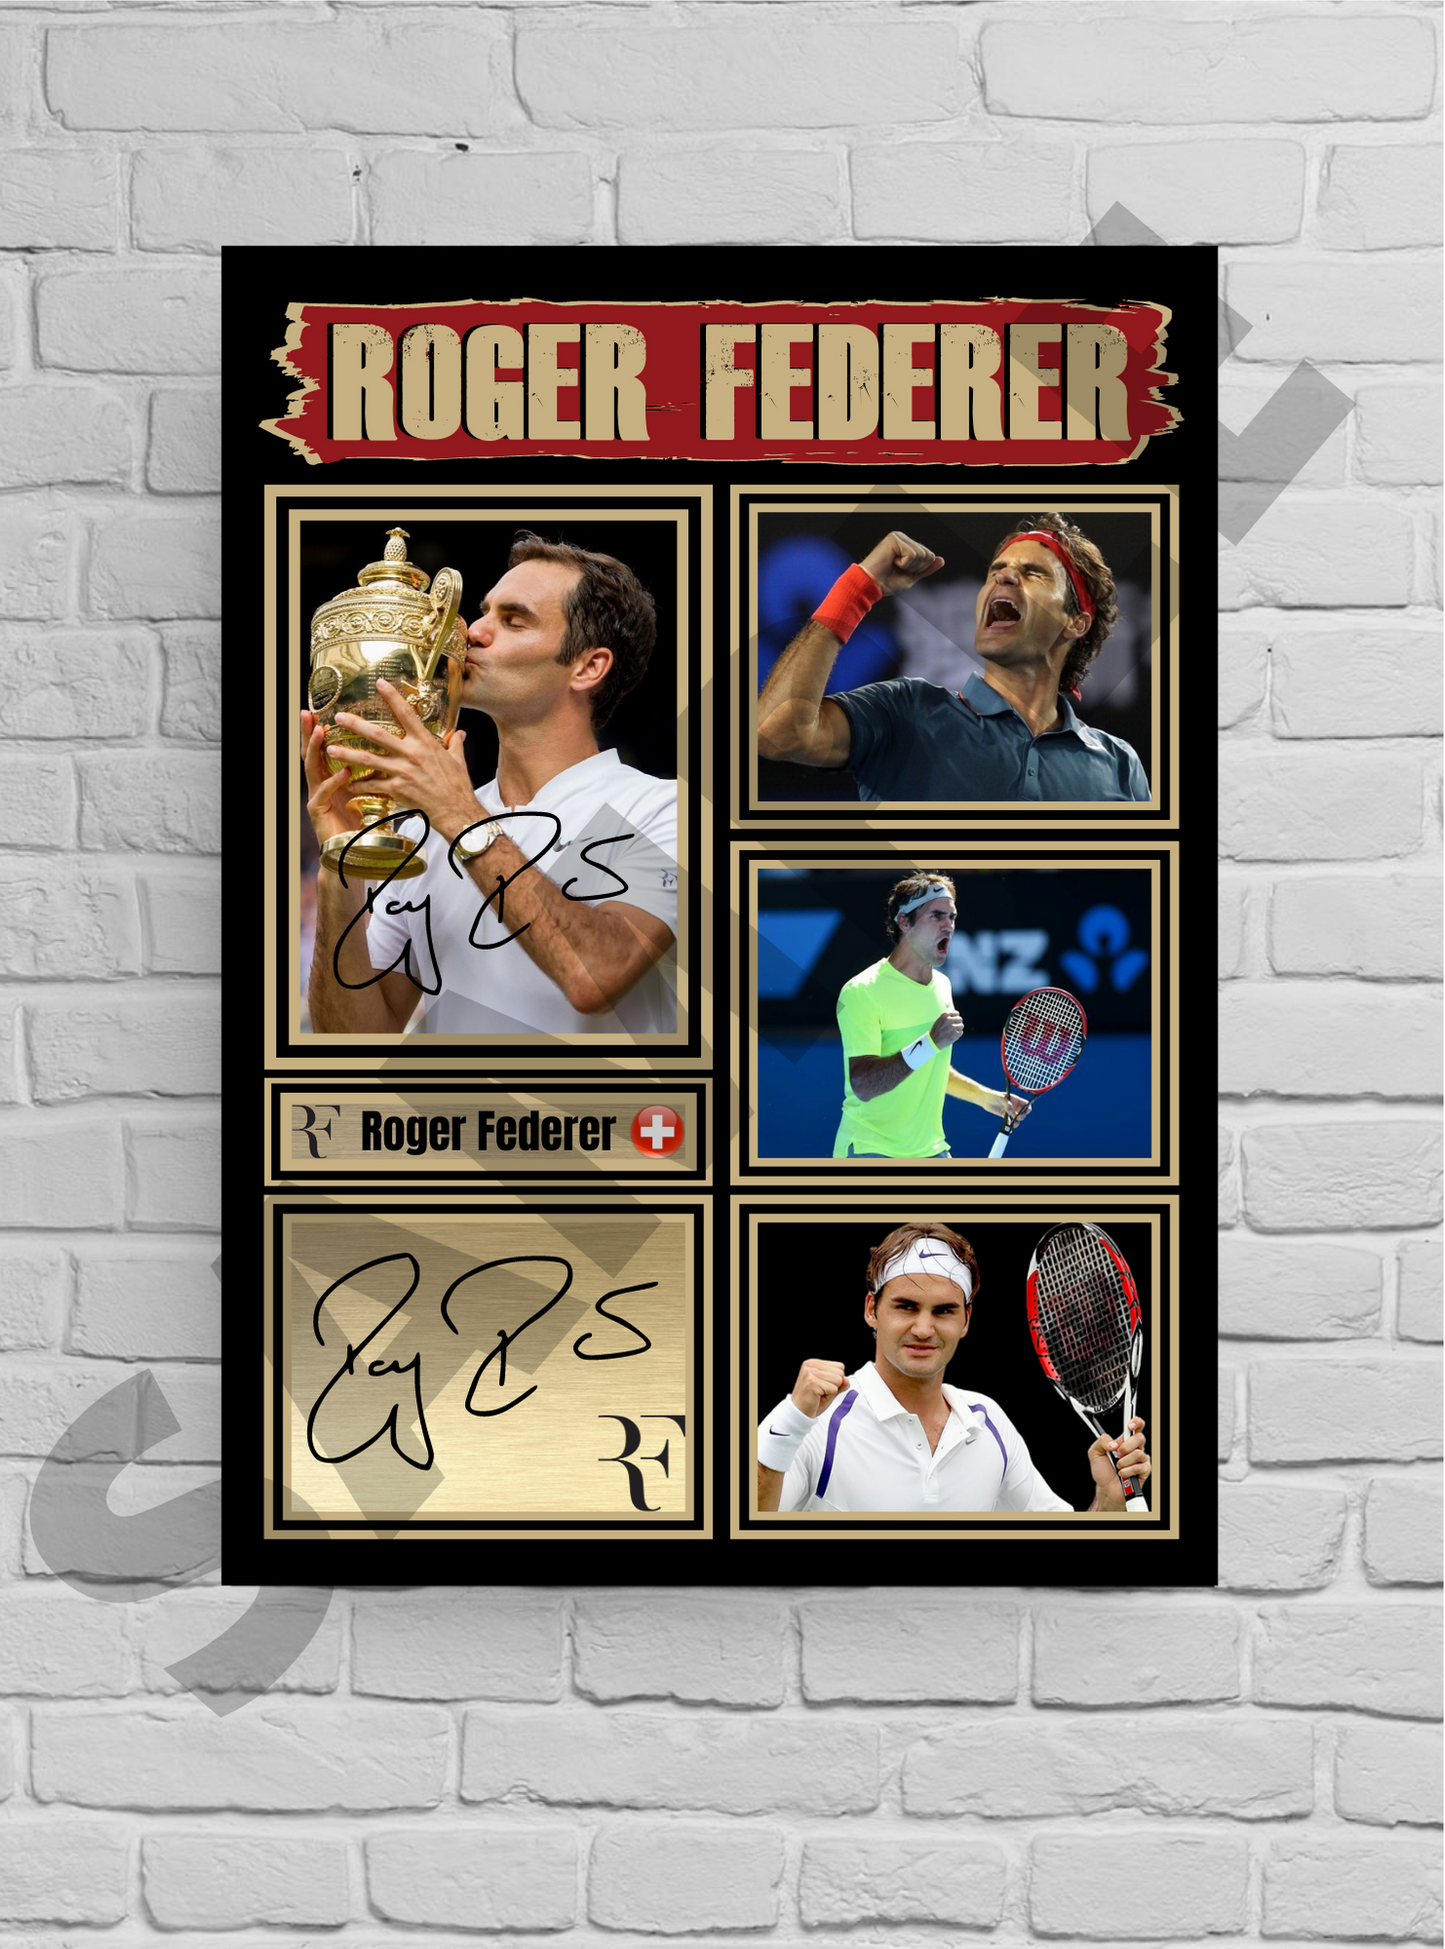 Roger Federer (Tennis) #51 - Memorabilia/Collectible/print signed